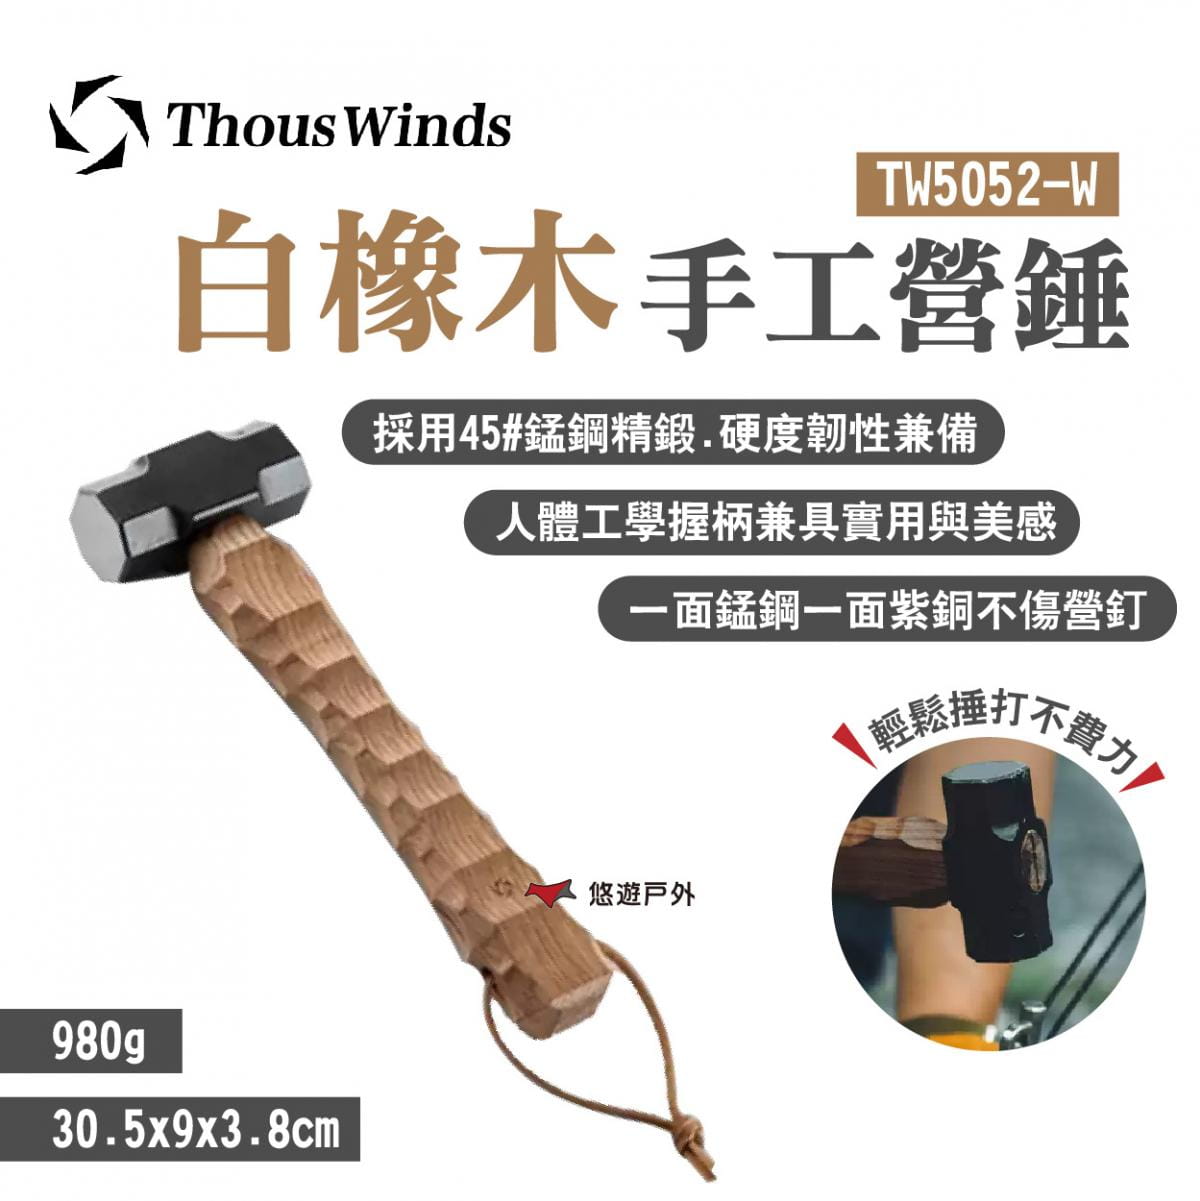 【Thous Winds】白橡木手工營錘 TW5052-W (悠遊戶外) 0